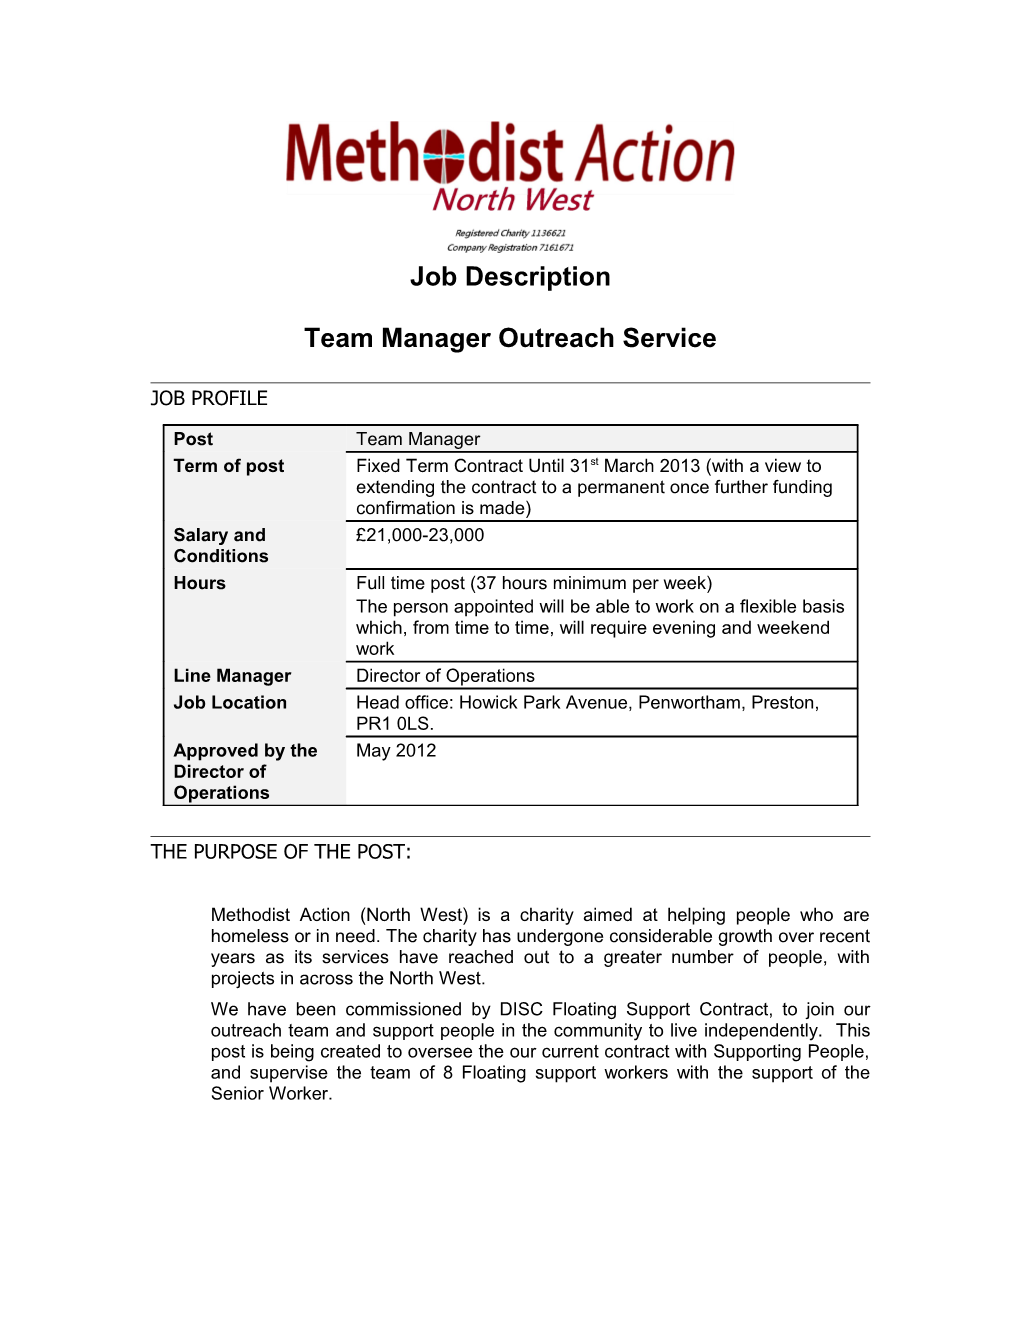 Team Manager Outreach Service